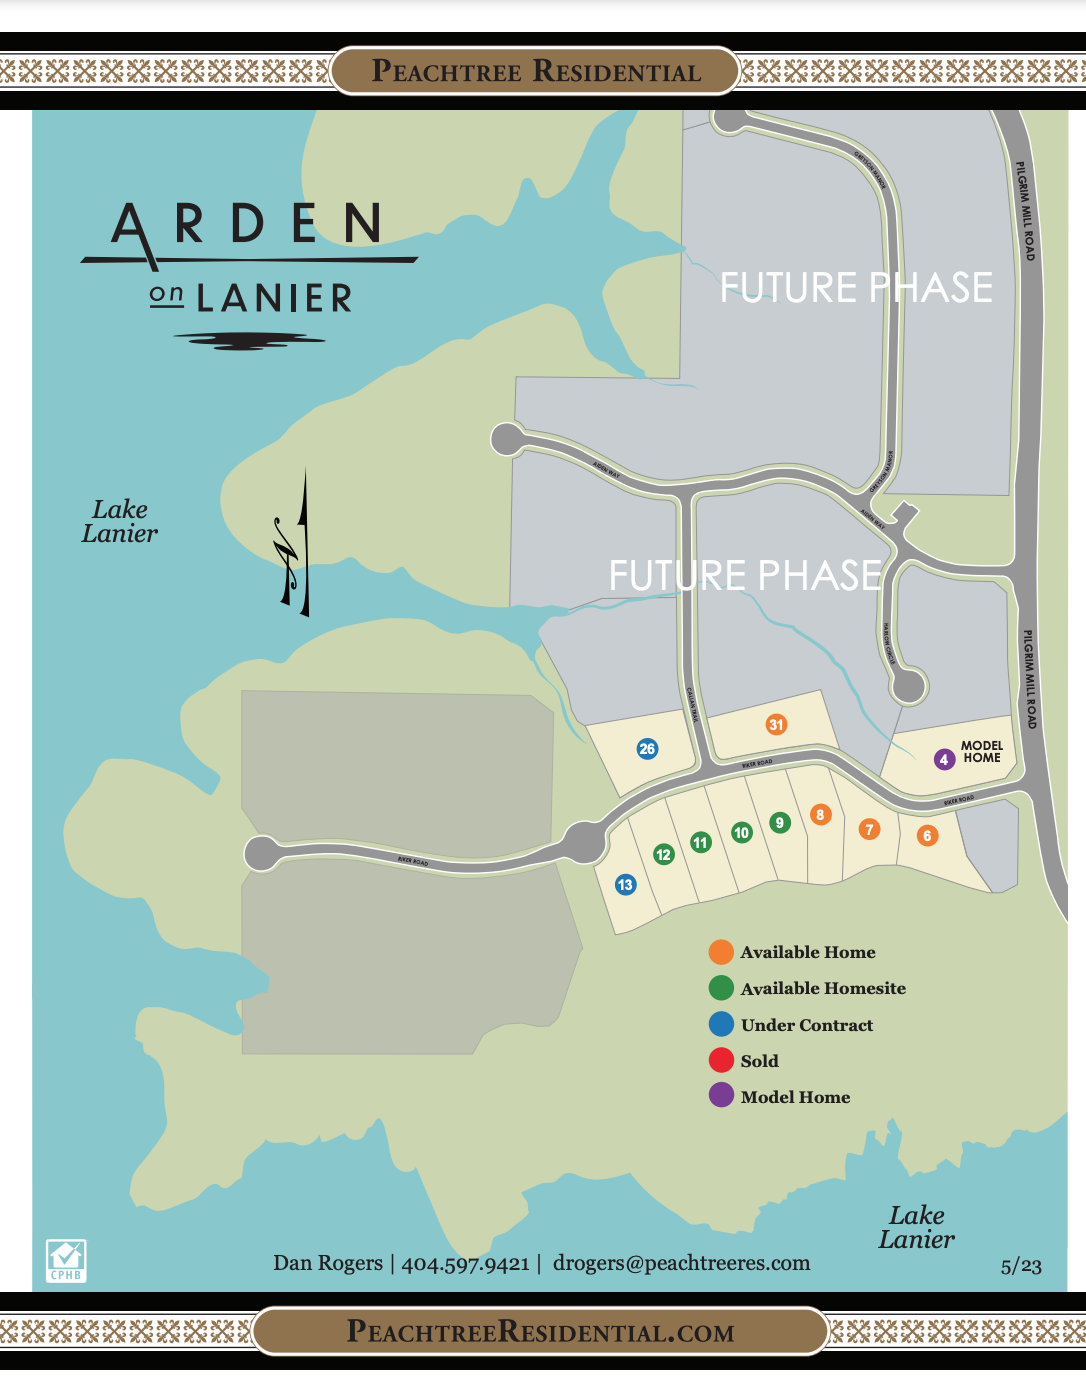 Arden on Lanier site map